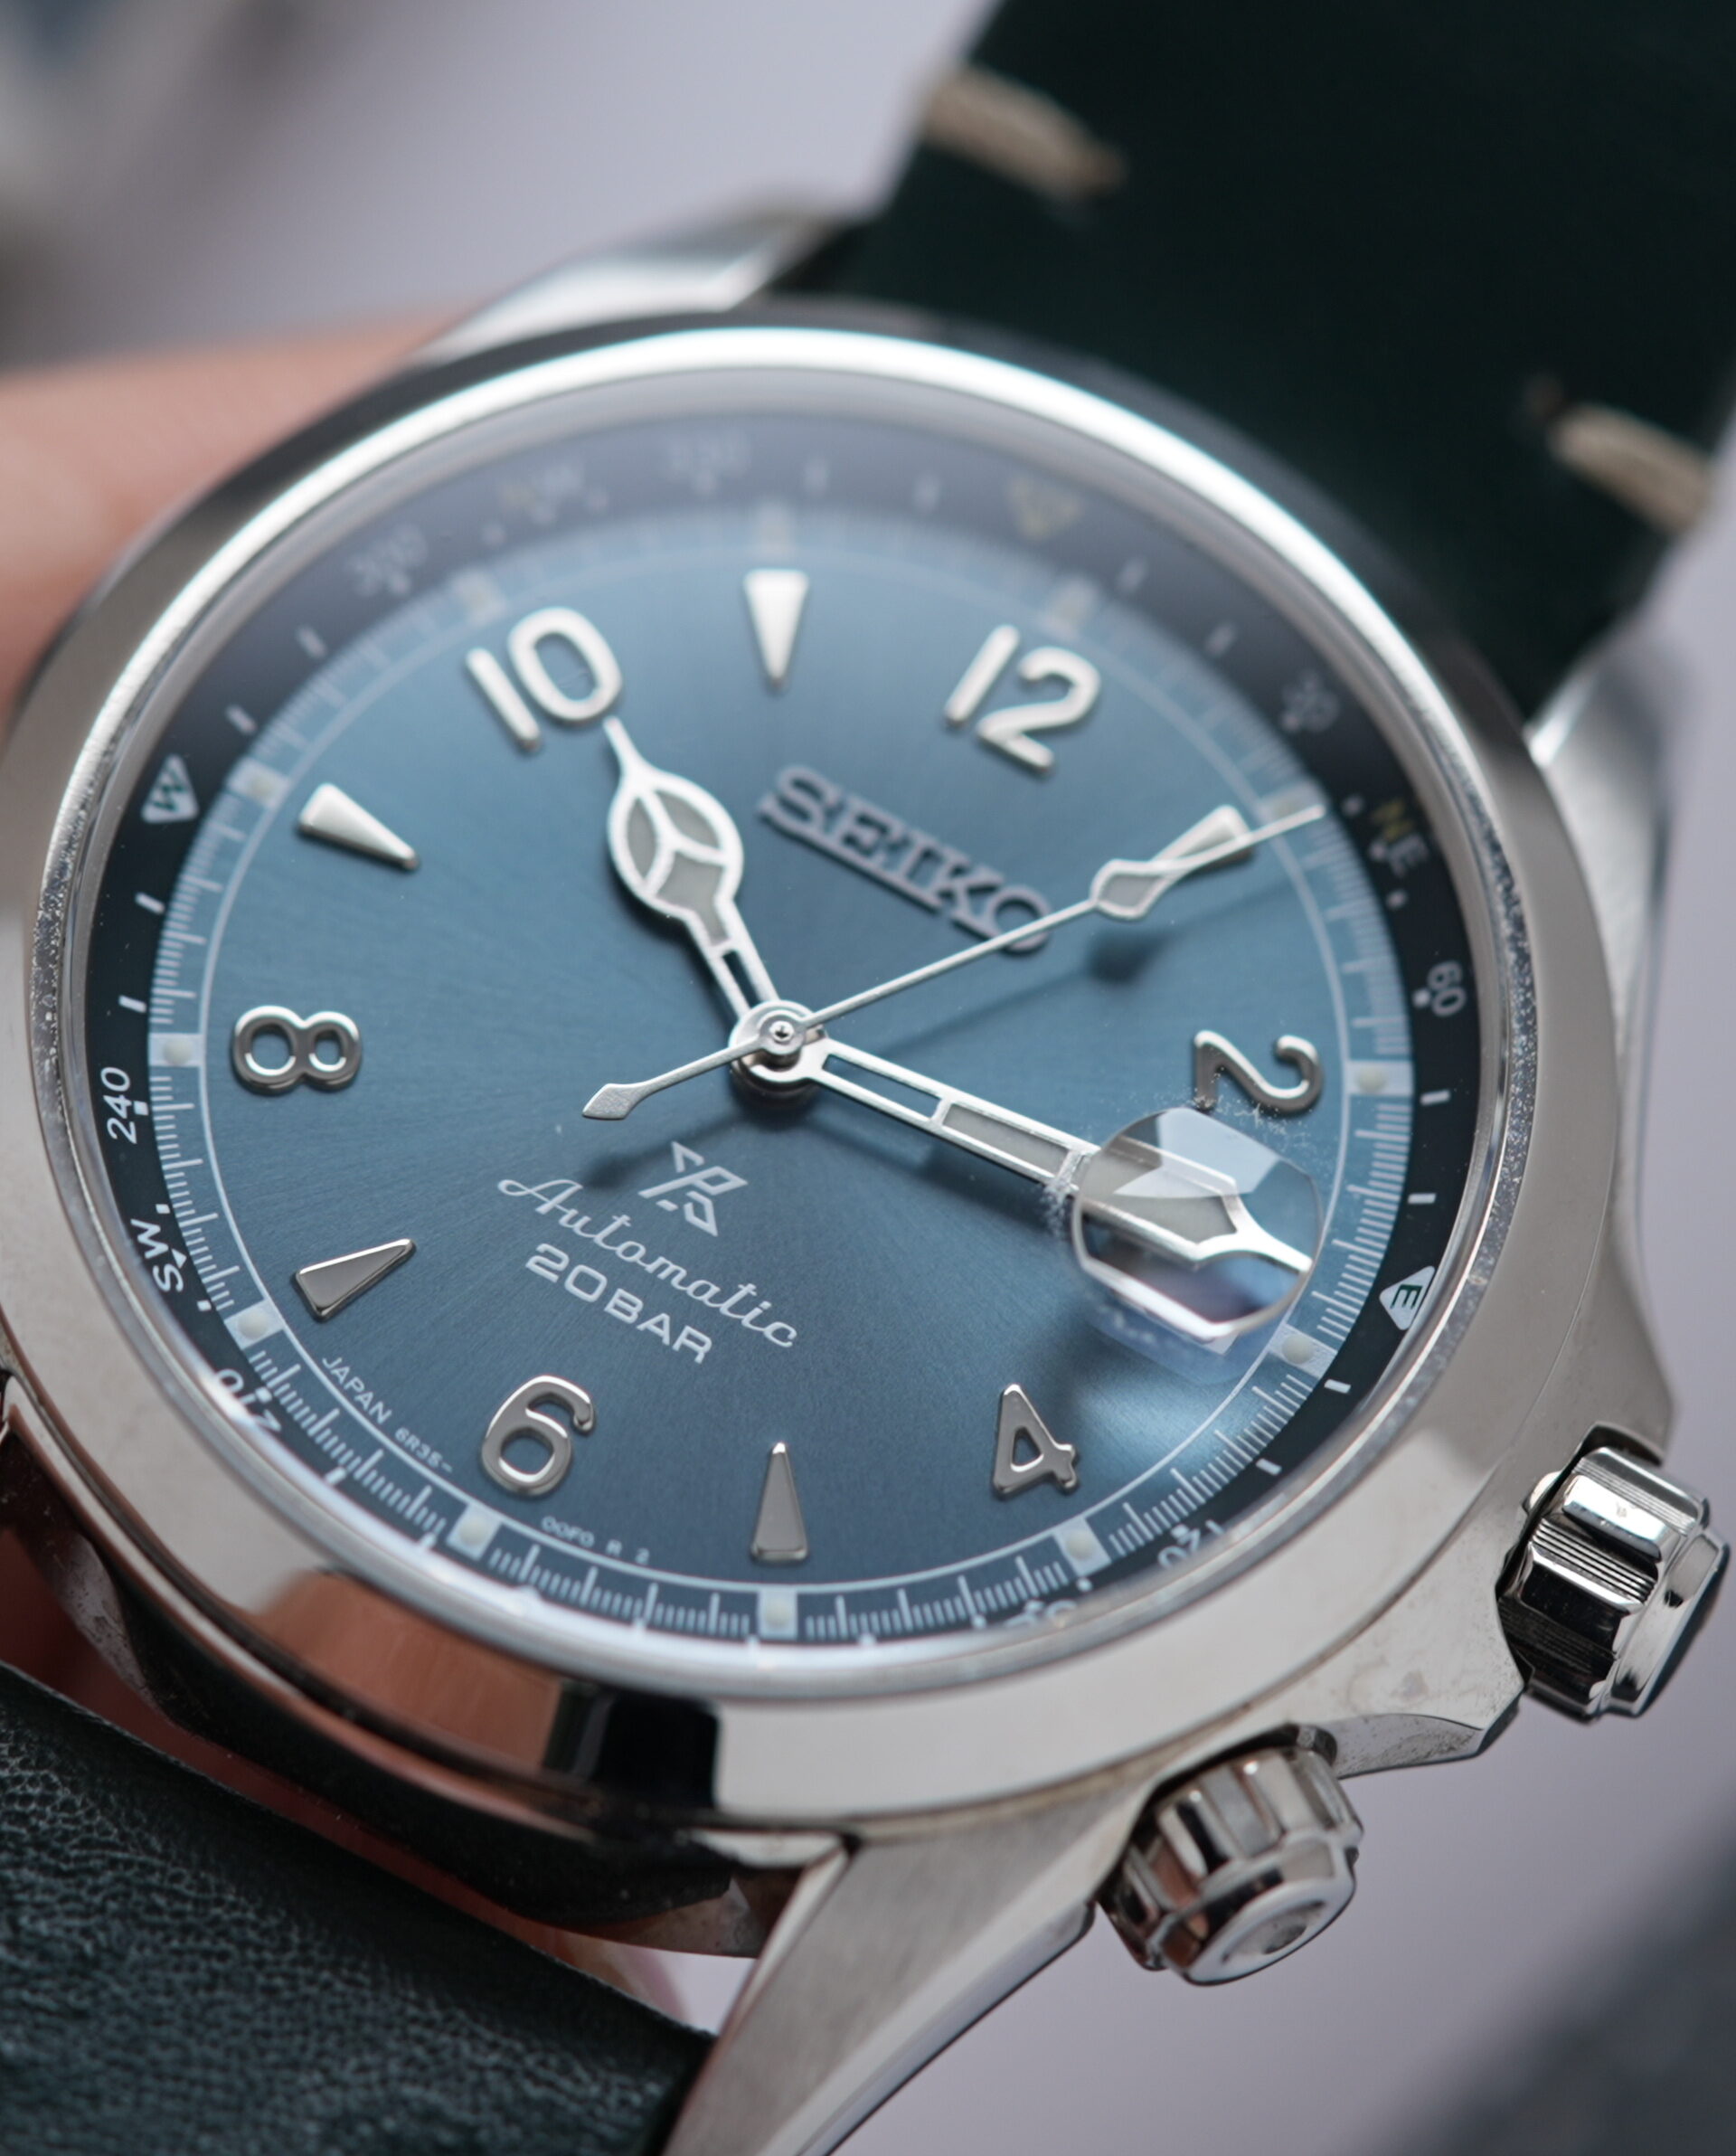 Seiko Alpinist Limited Edition Alpinist Mountain Glacier SPB199J1 watch being held in hand.